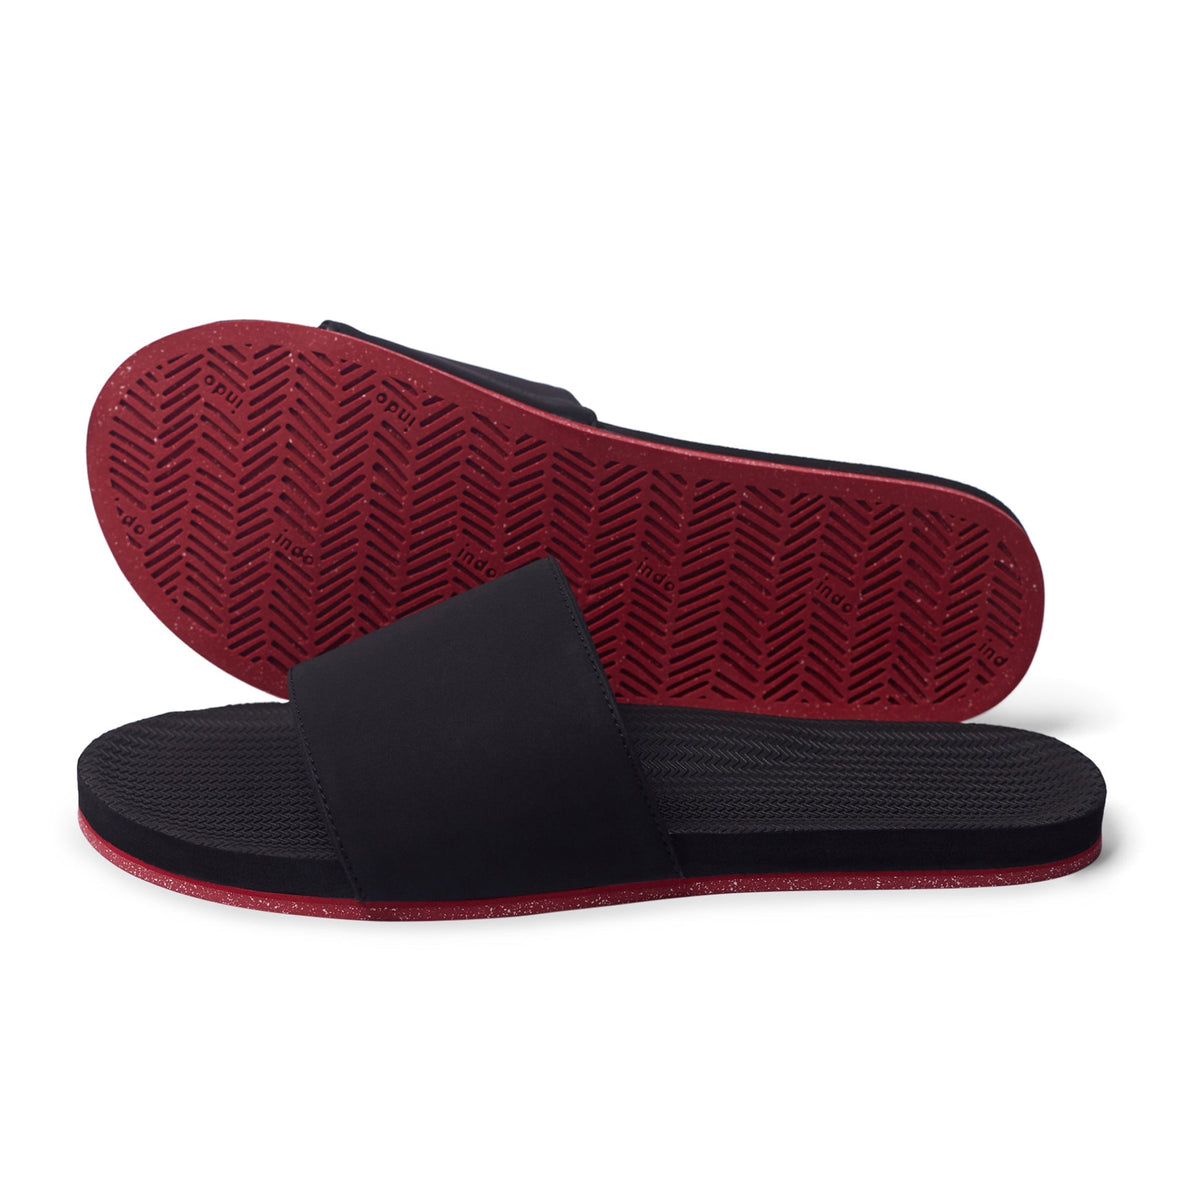 Men’s Slides Sneaker Sole - Black/Red Sole